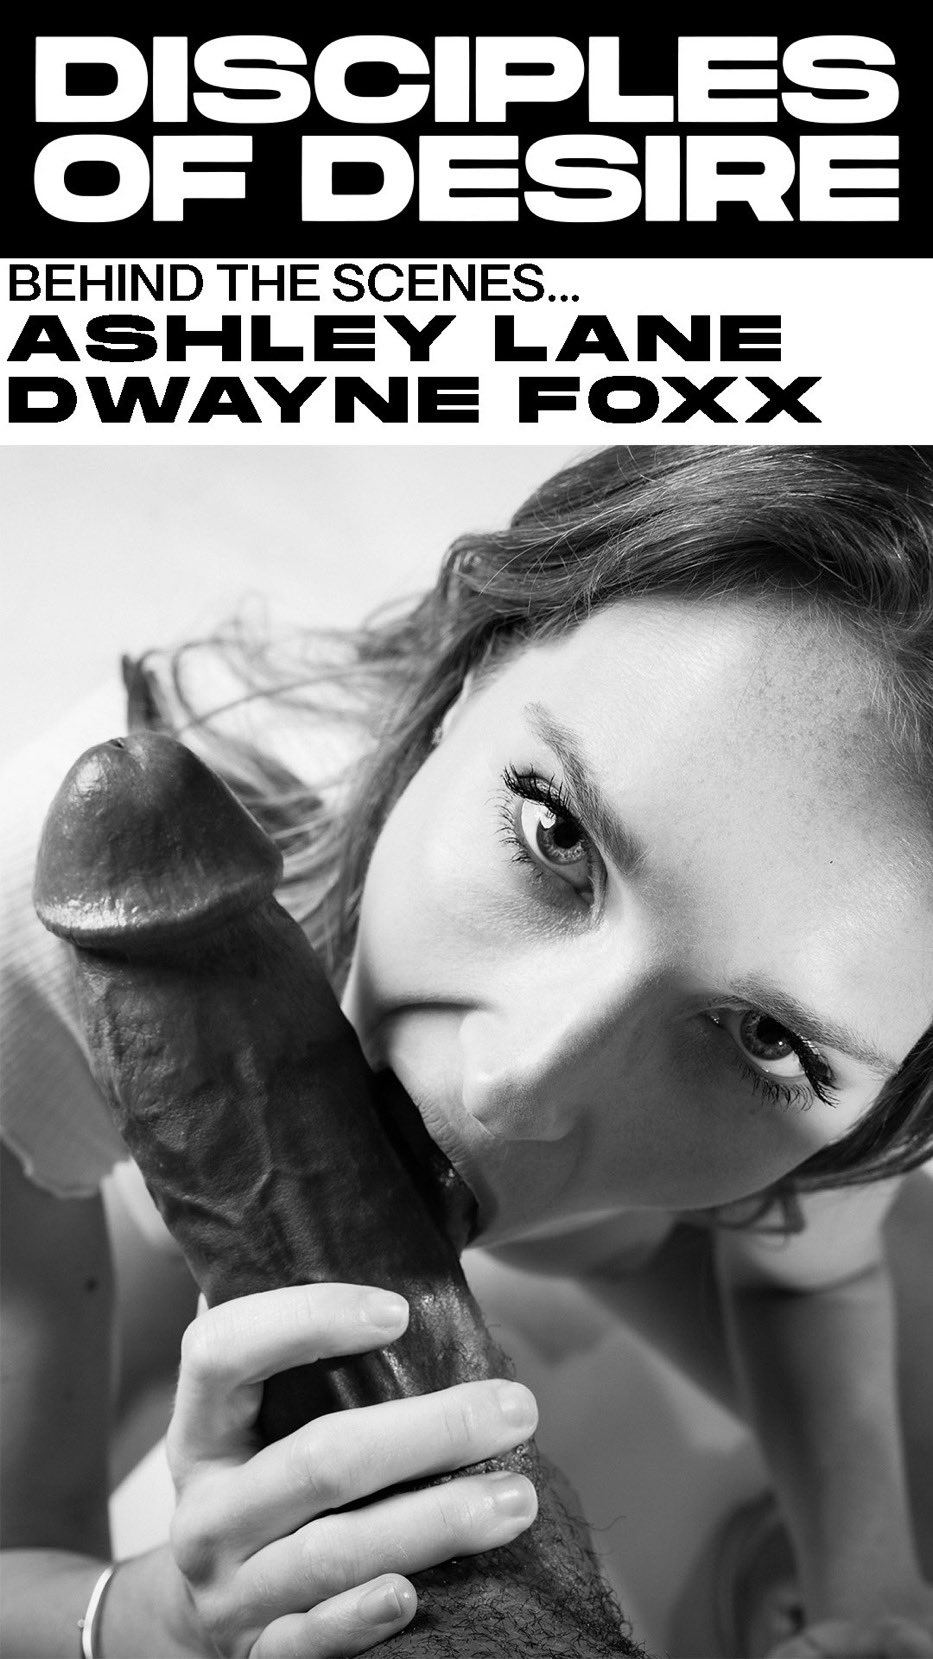 TW Pornstars - Ashley Lane. Twitter. Cumming soon @DwayneFoxxx  @DiscplsofDesire 😘😘😘. 9:56 PM - 22 May 2021